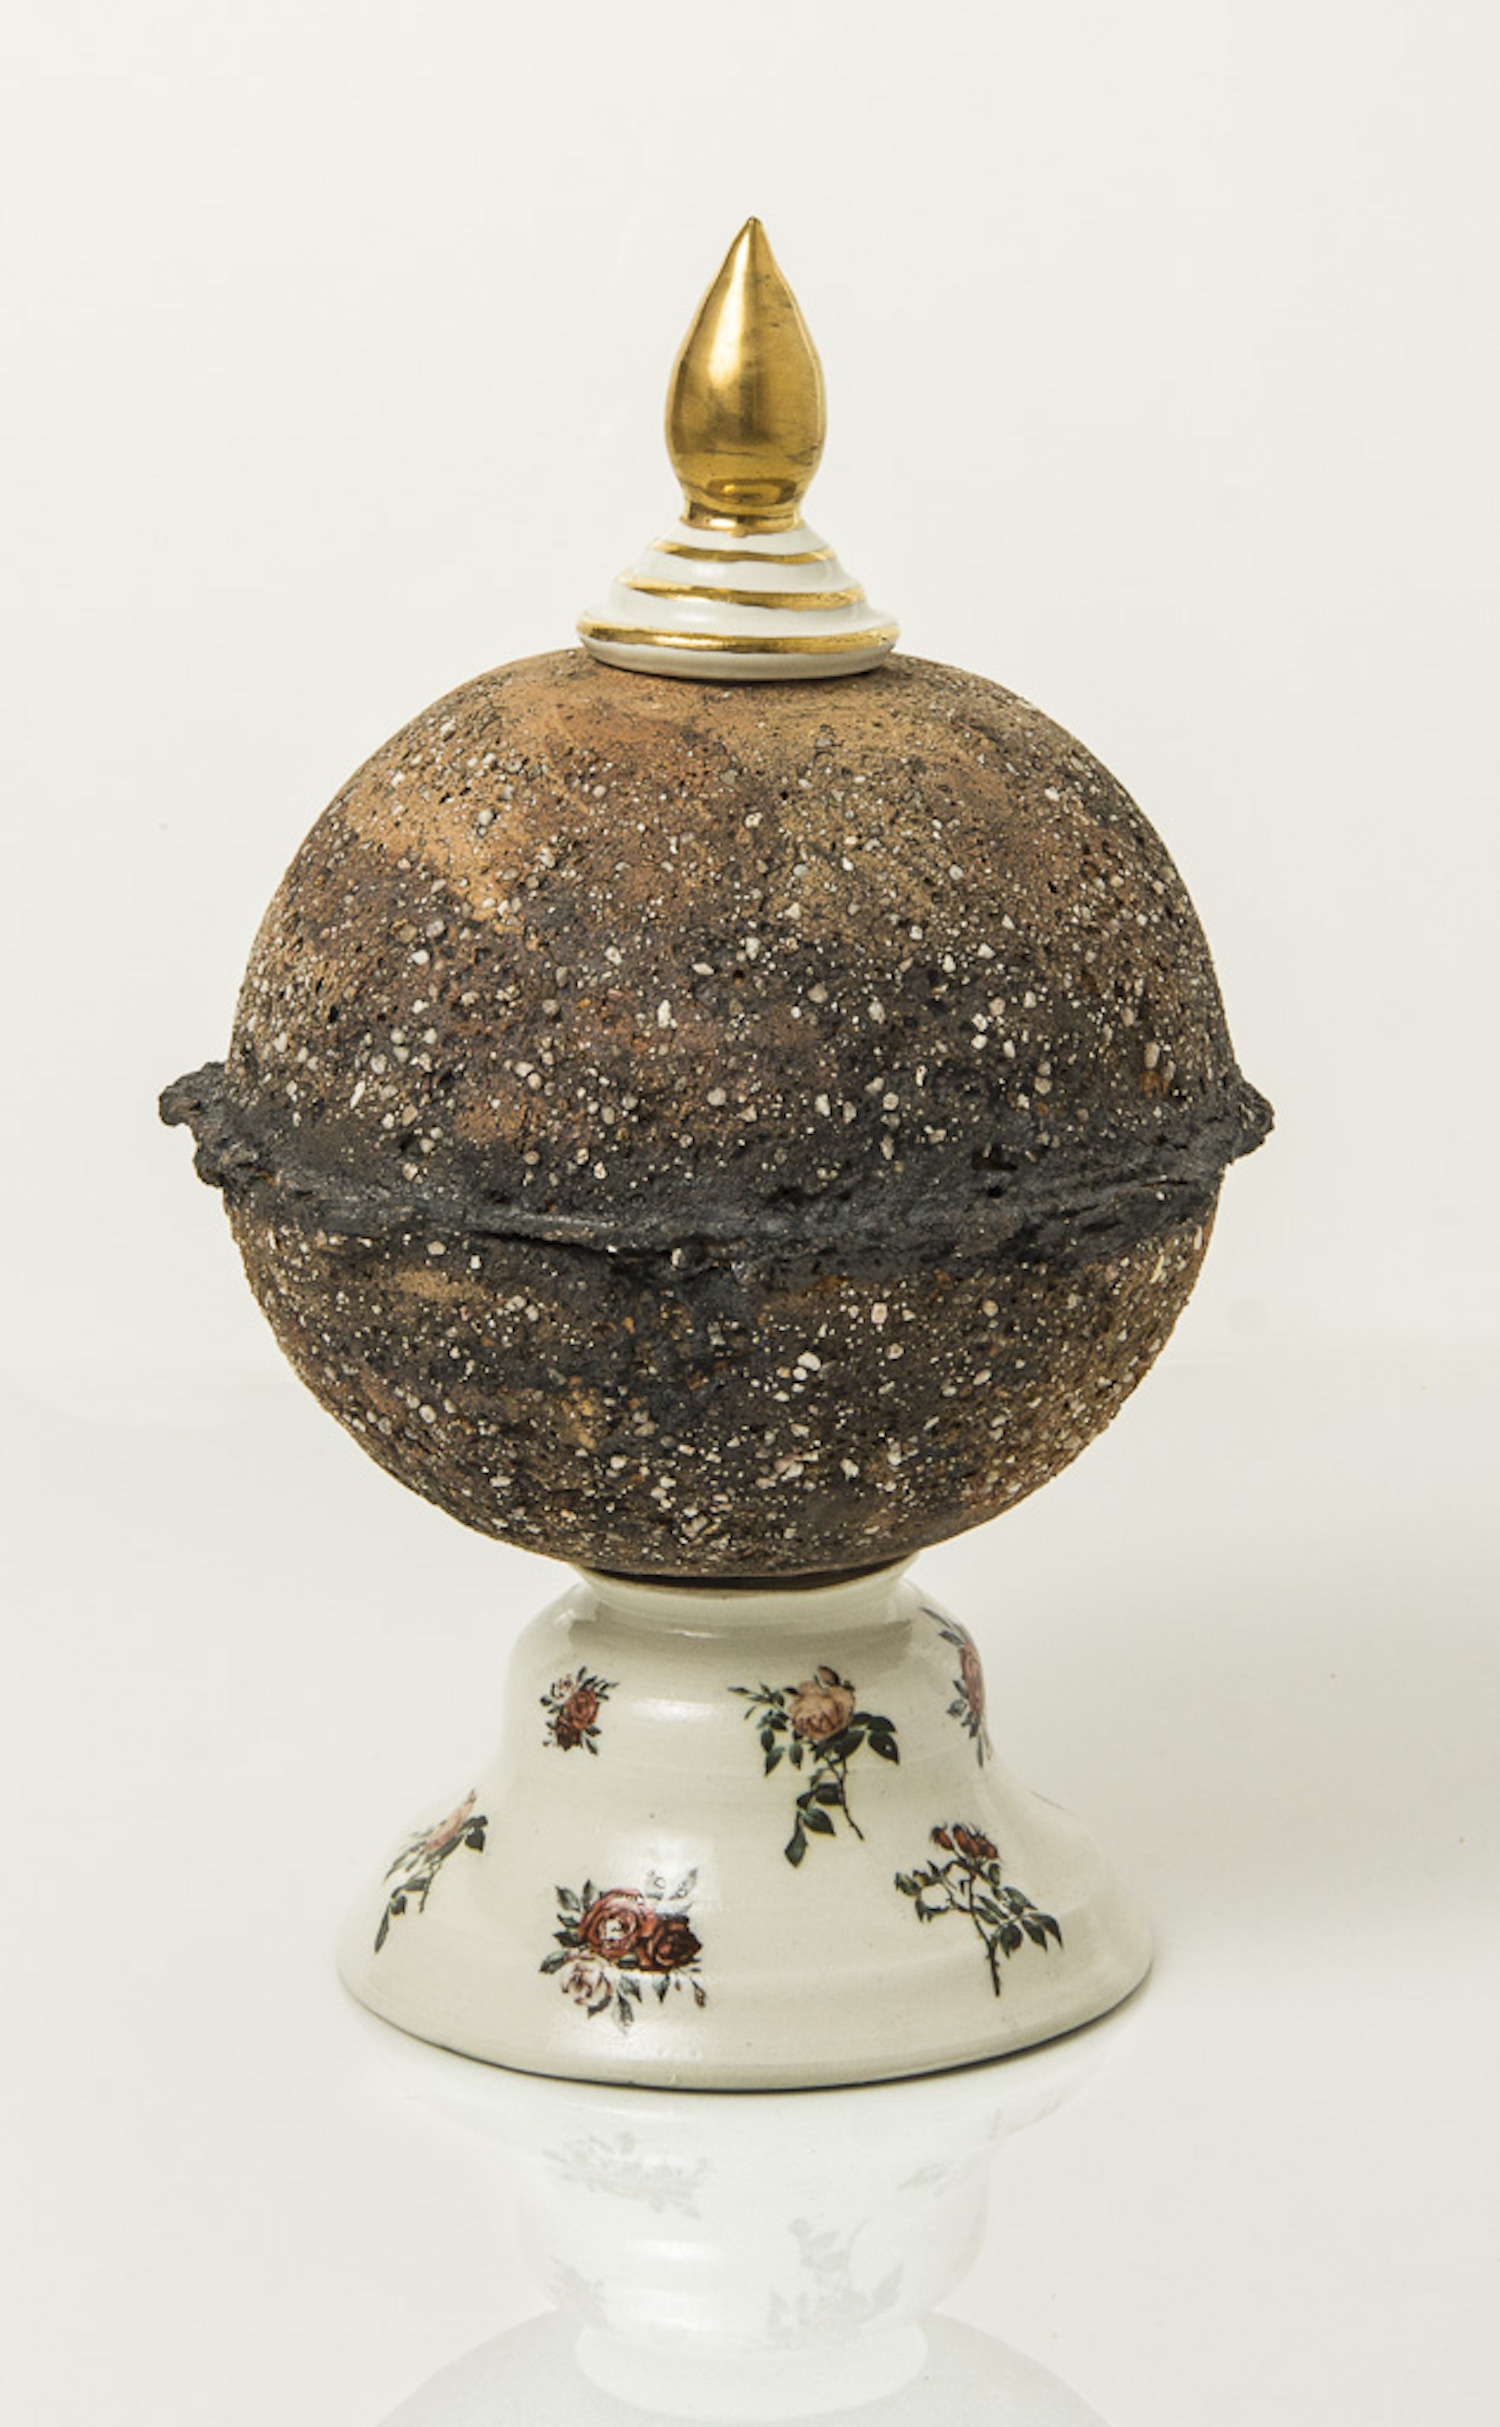 ceramic globe sculpture with bottle stopper